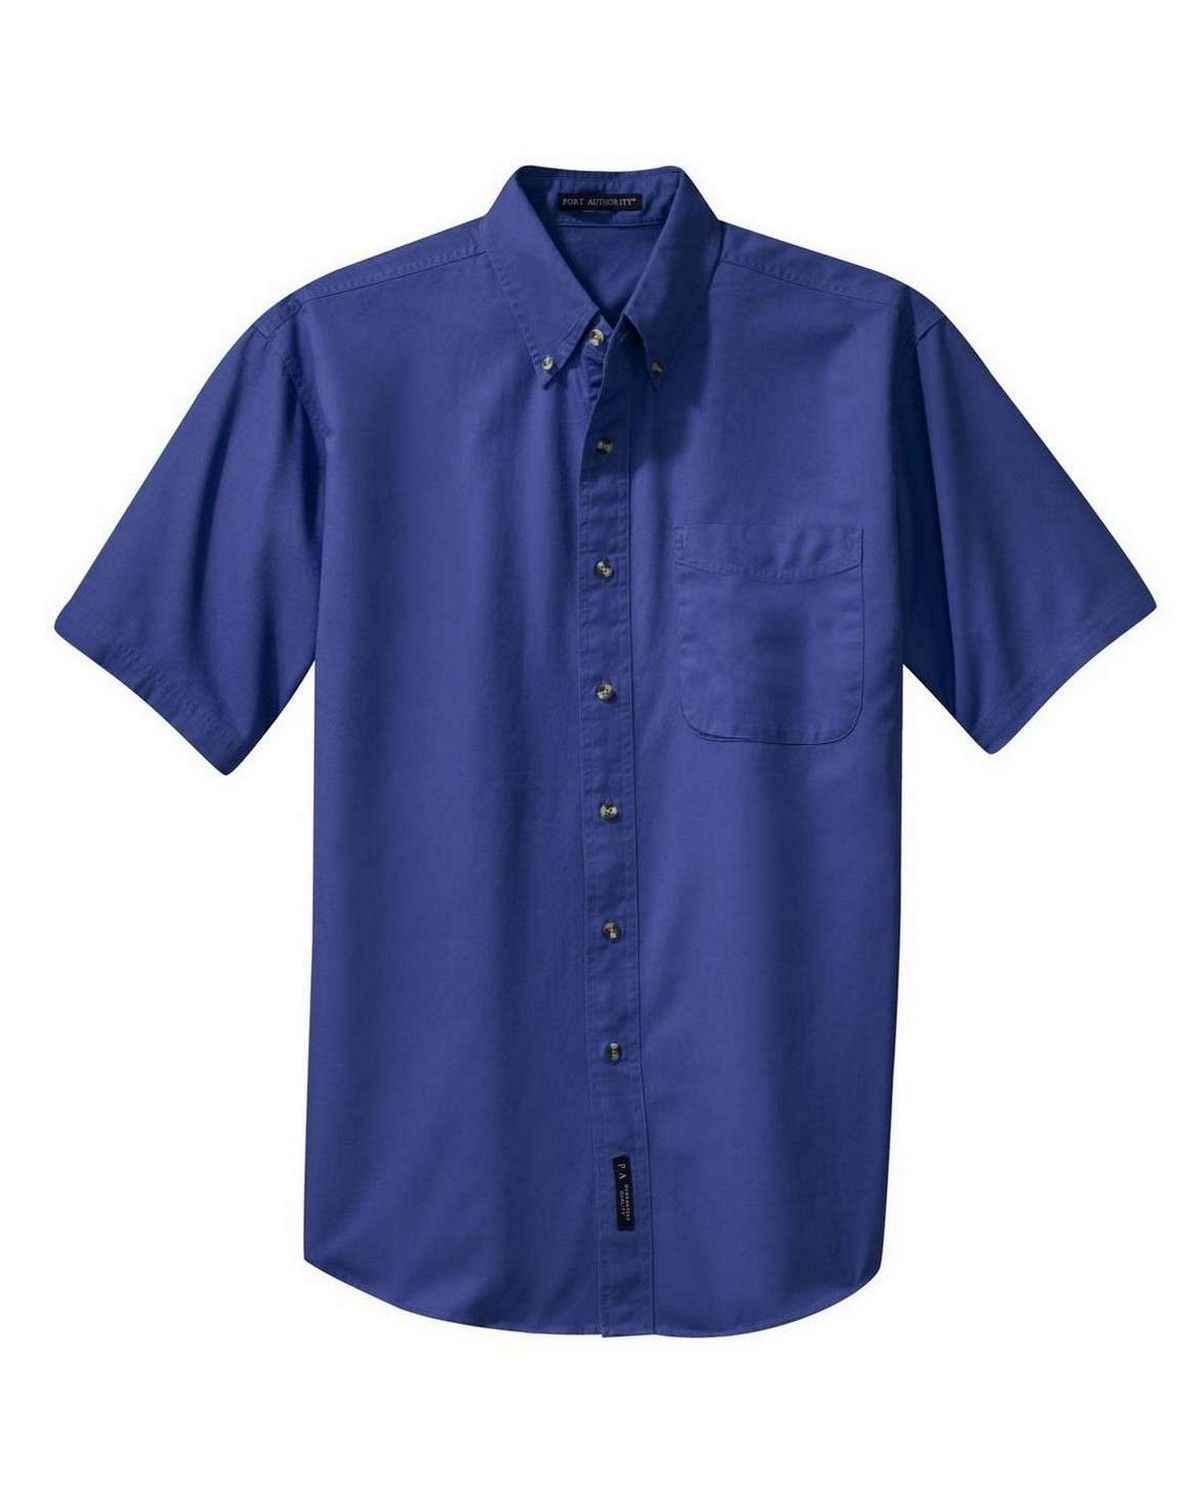 Port Authority S500T Short Sleeve Twill Shirt